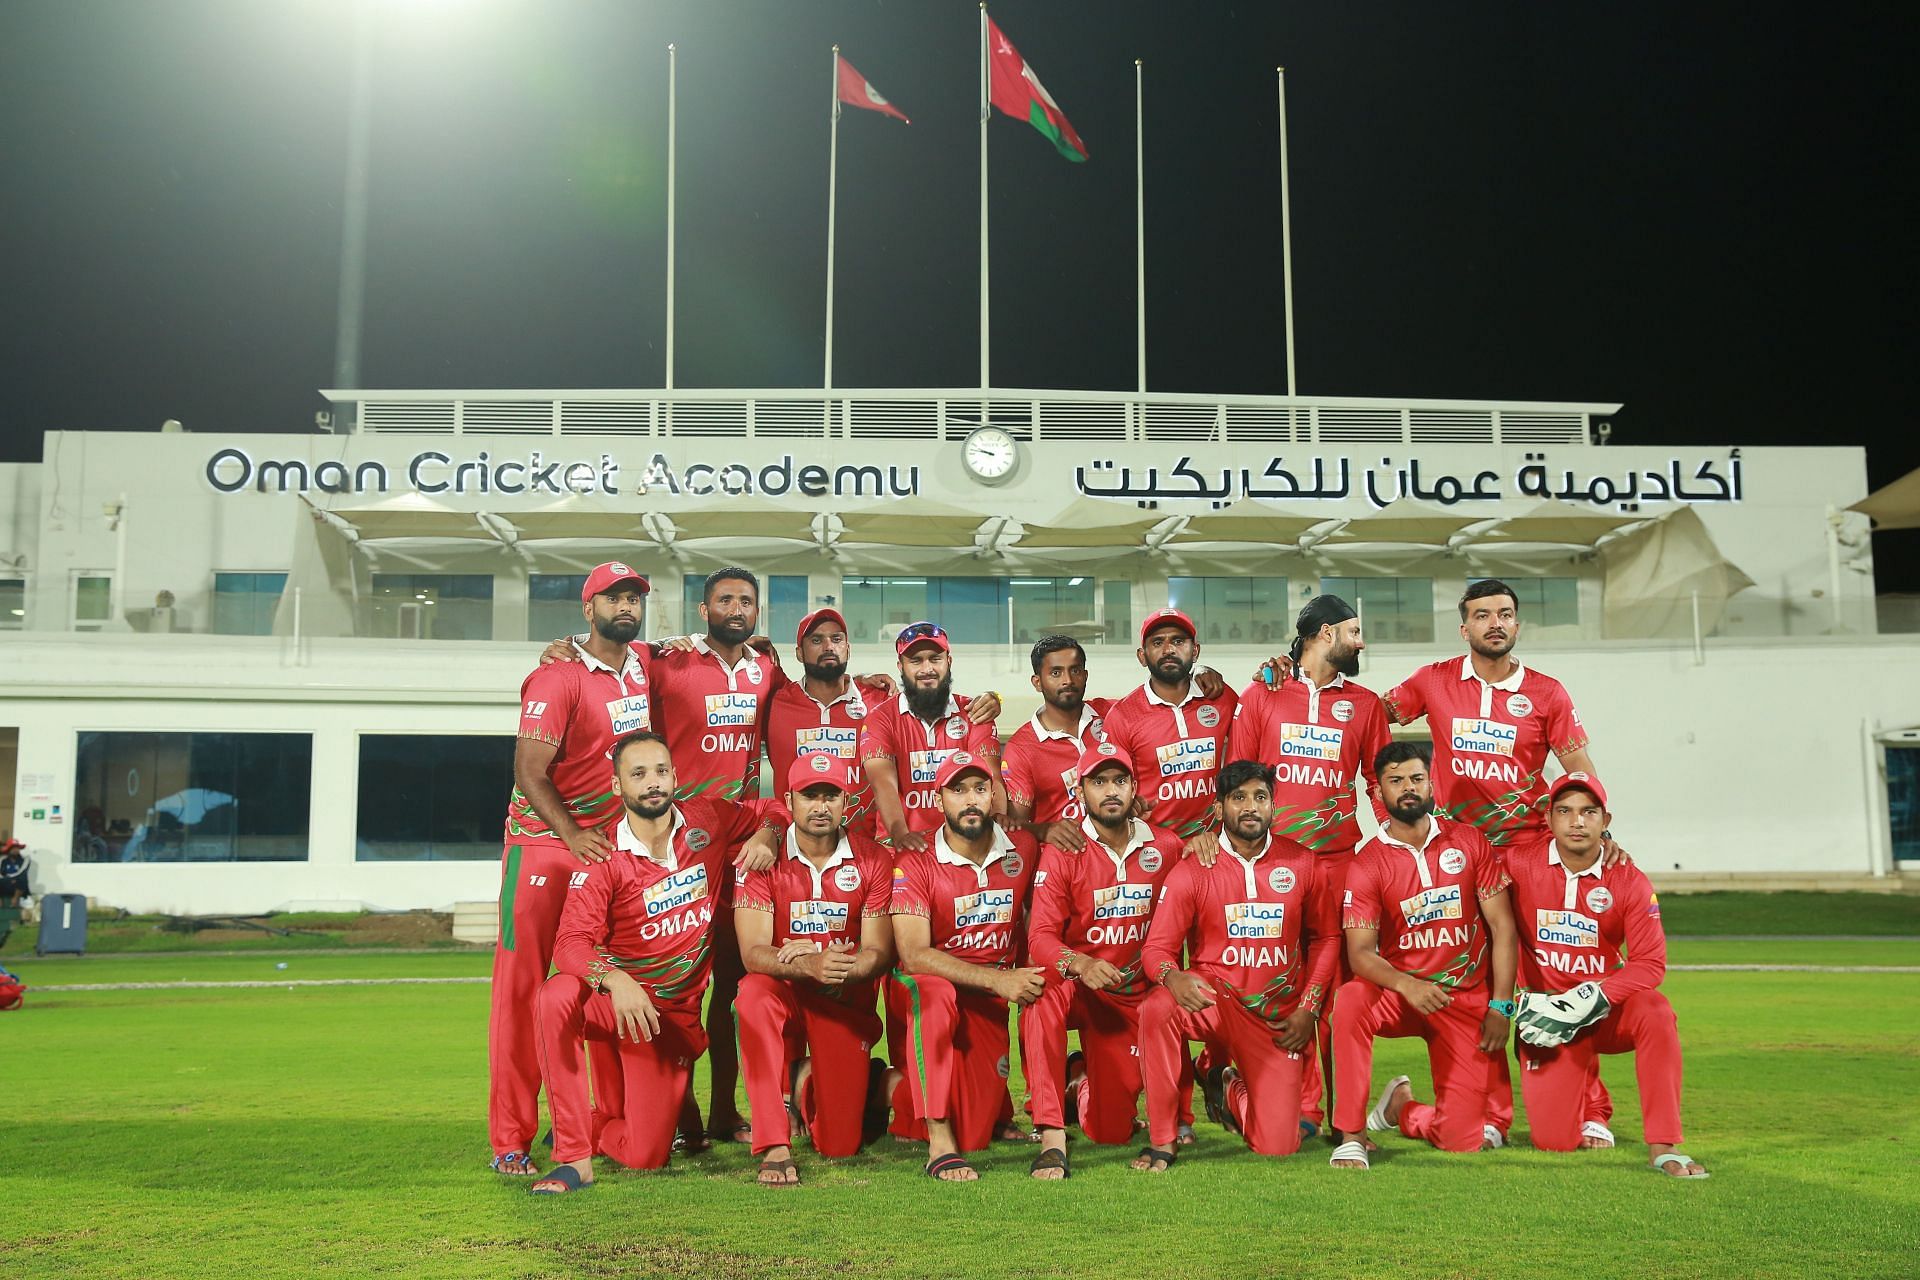 The Oman cricket team